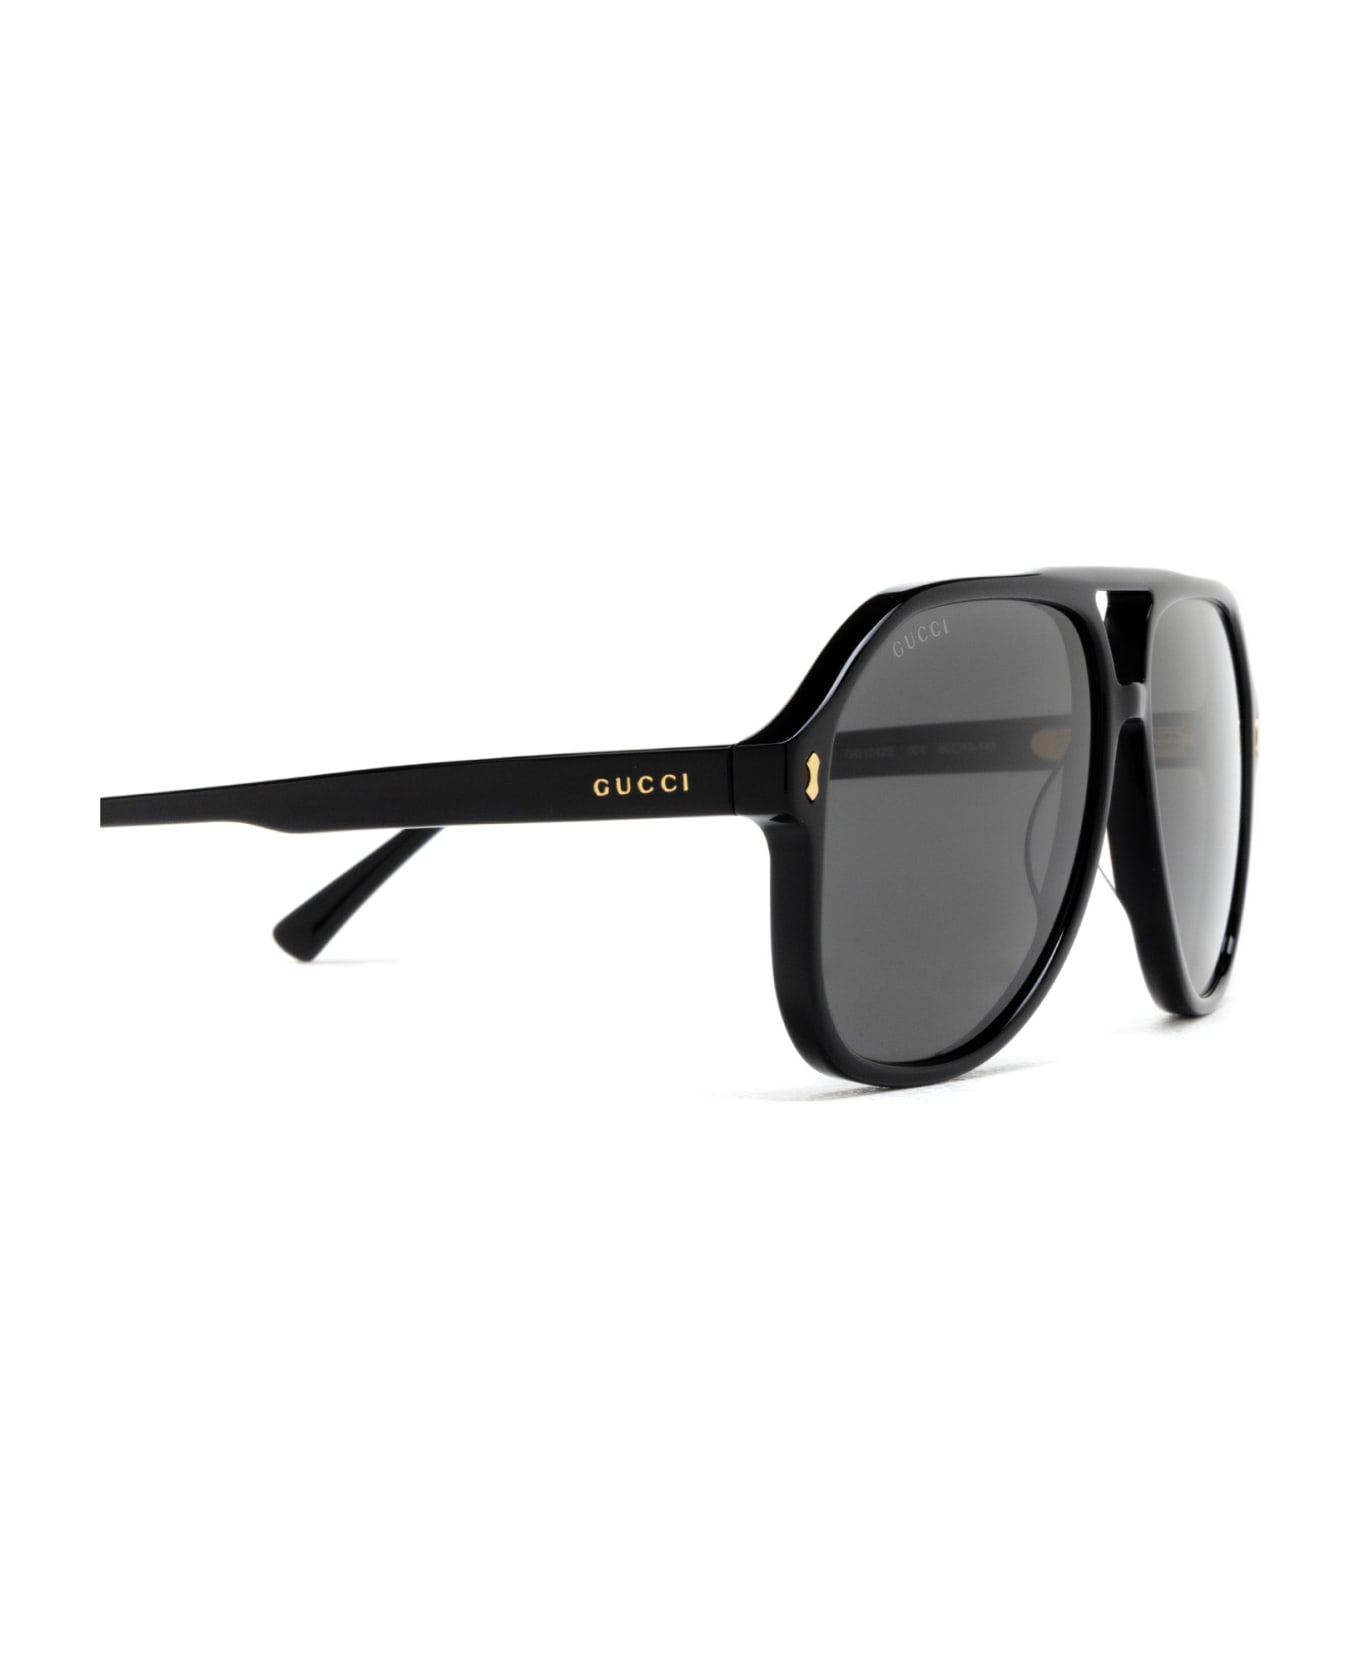 Gucci Eyewear Gg1042s Black Sunglasses - Black